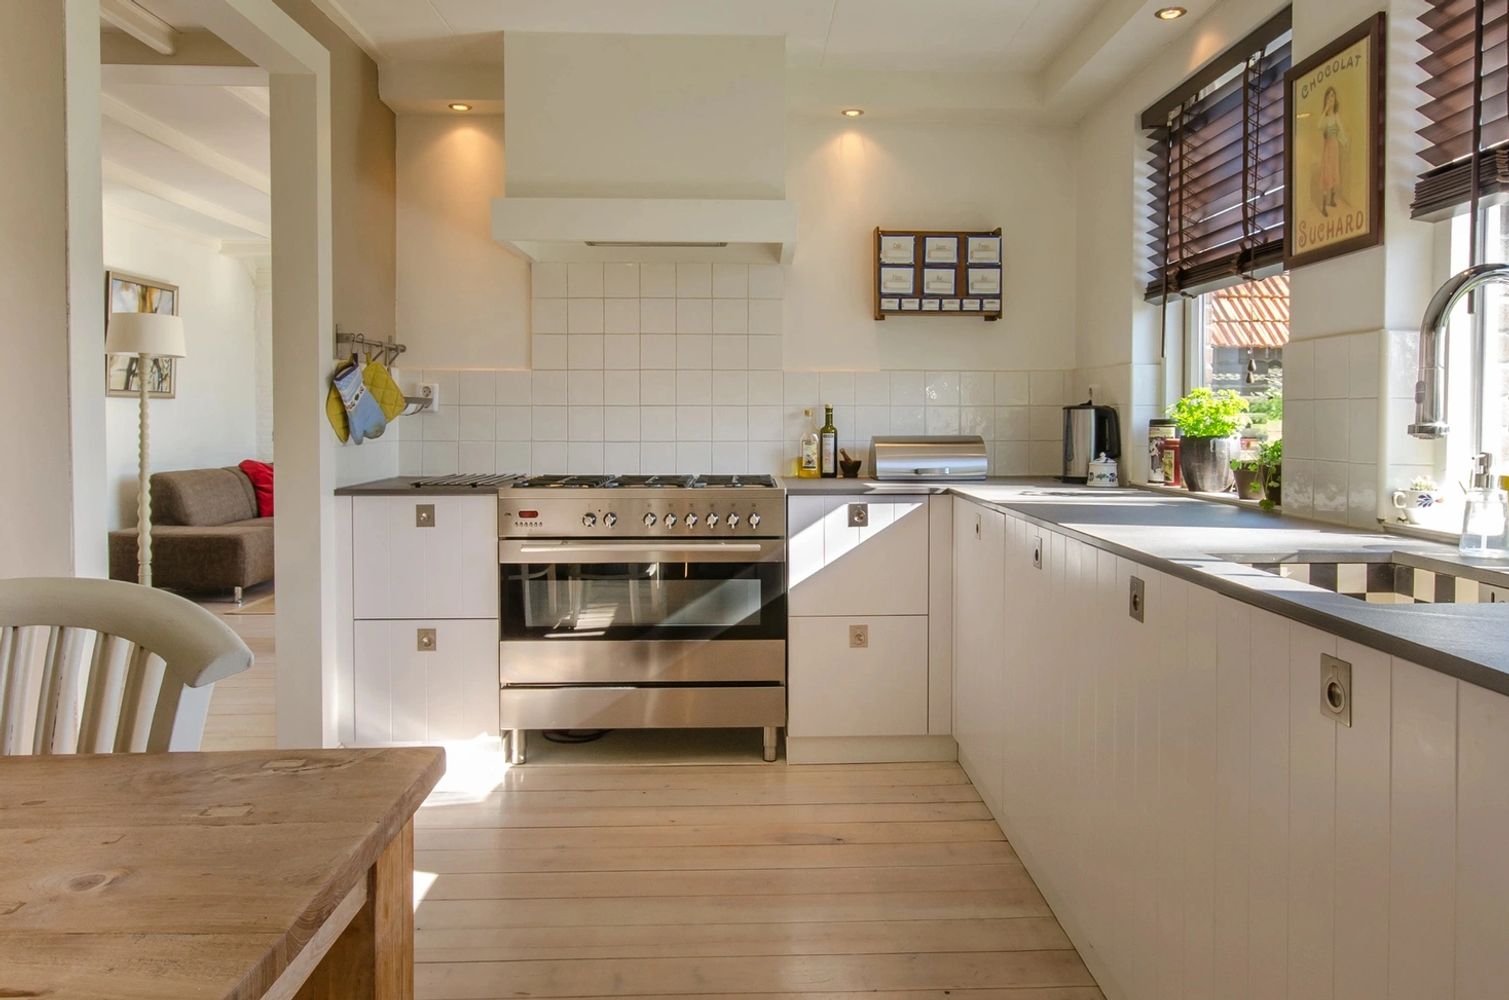 Kitchen Remodel Cabinets and Countertops Tile Backsplash Wood Flooring  Appliances Lighting Fixtures